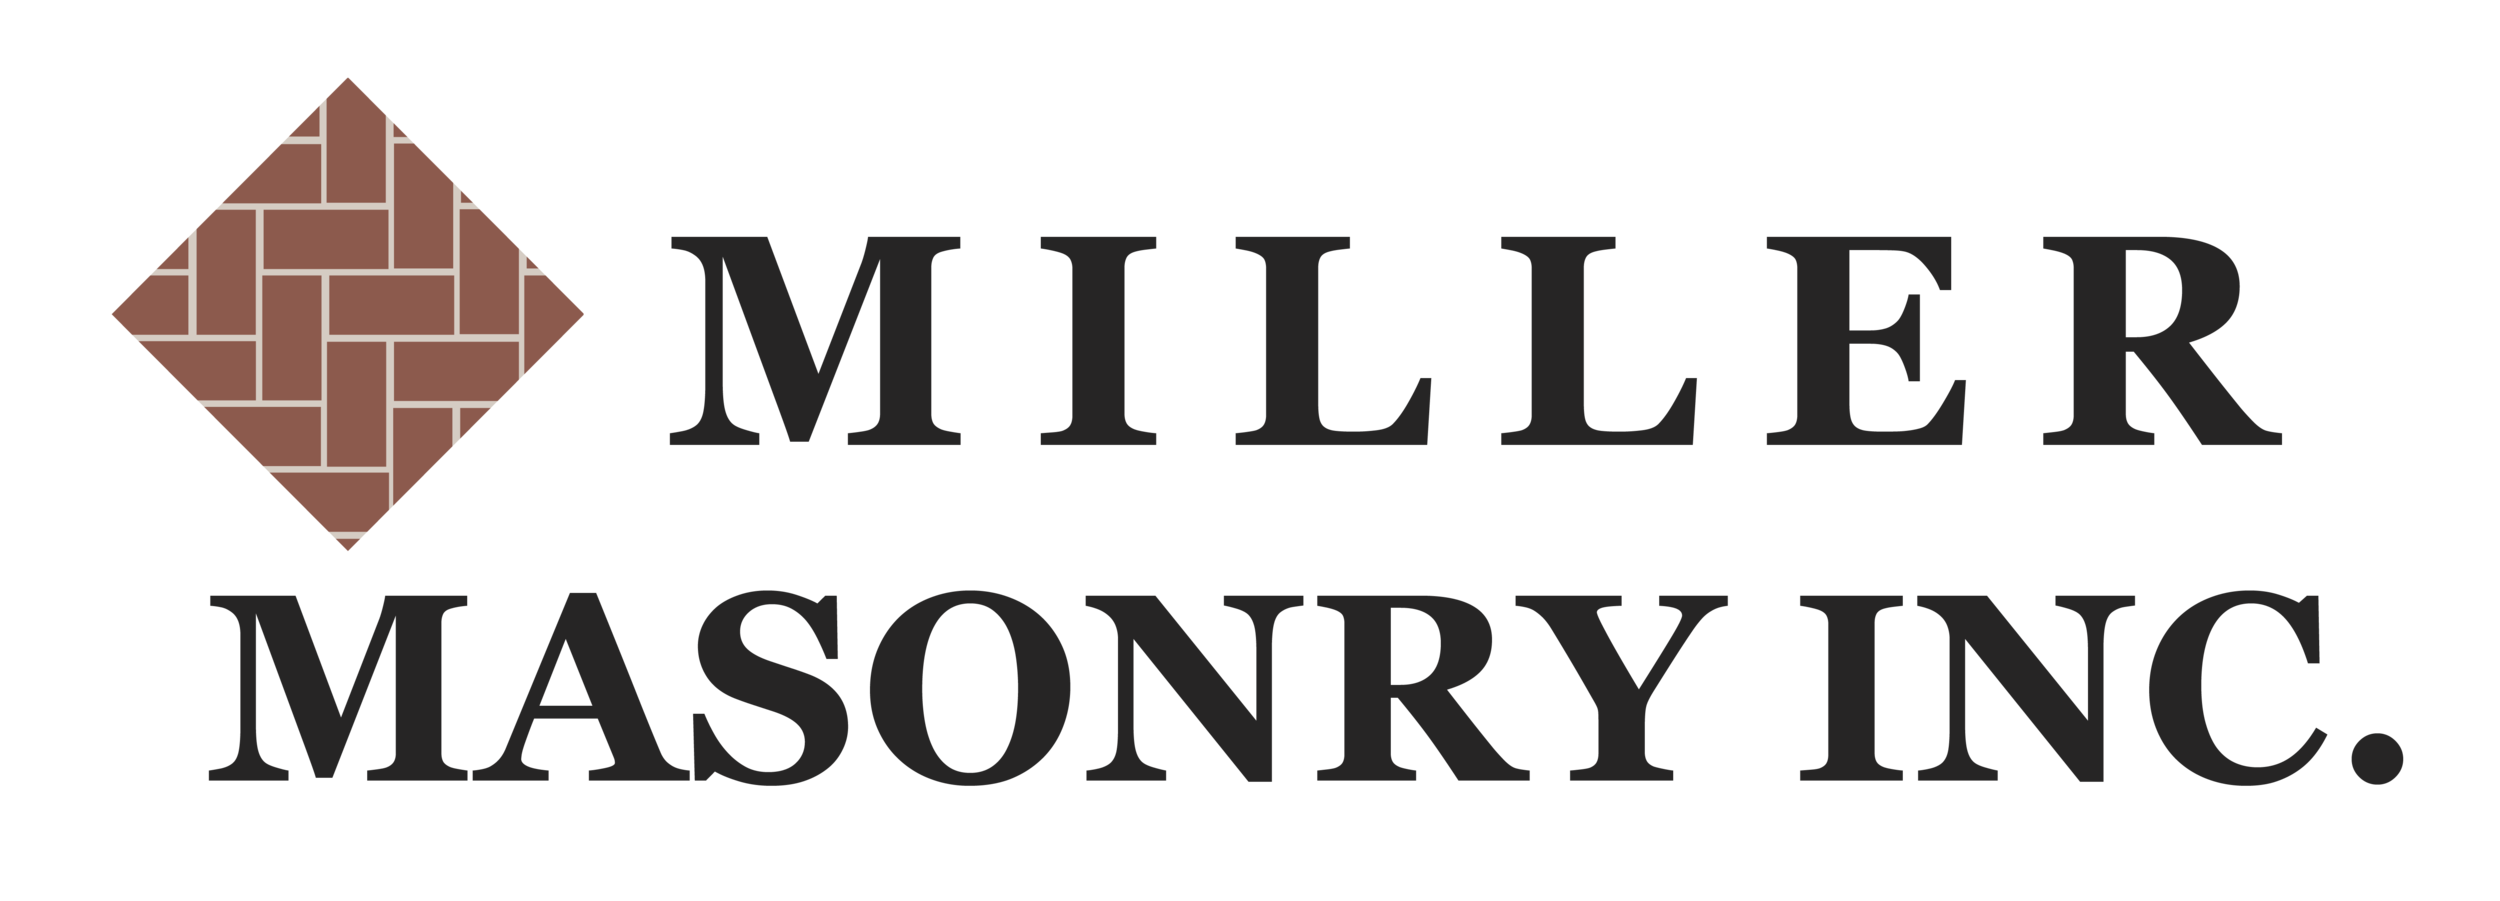 MILLER MASONRY, LLC